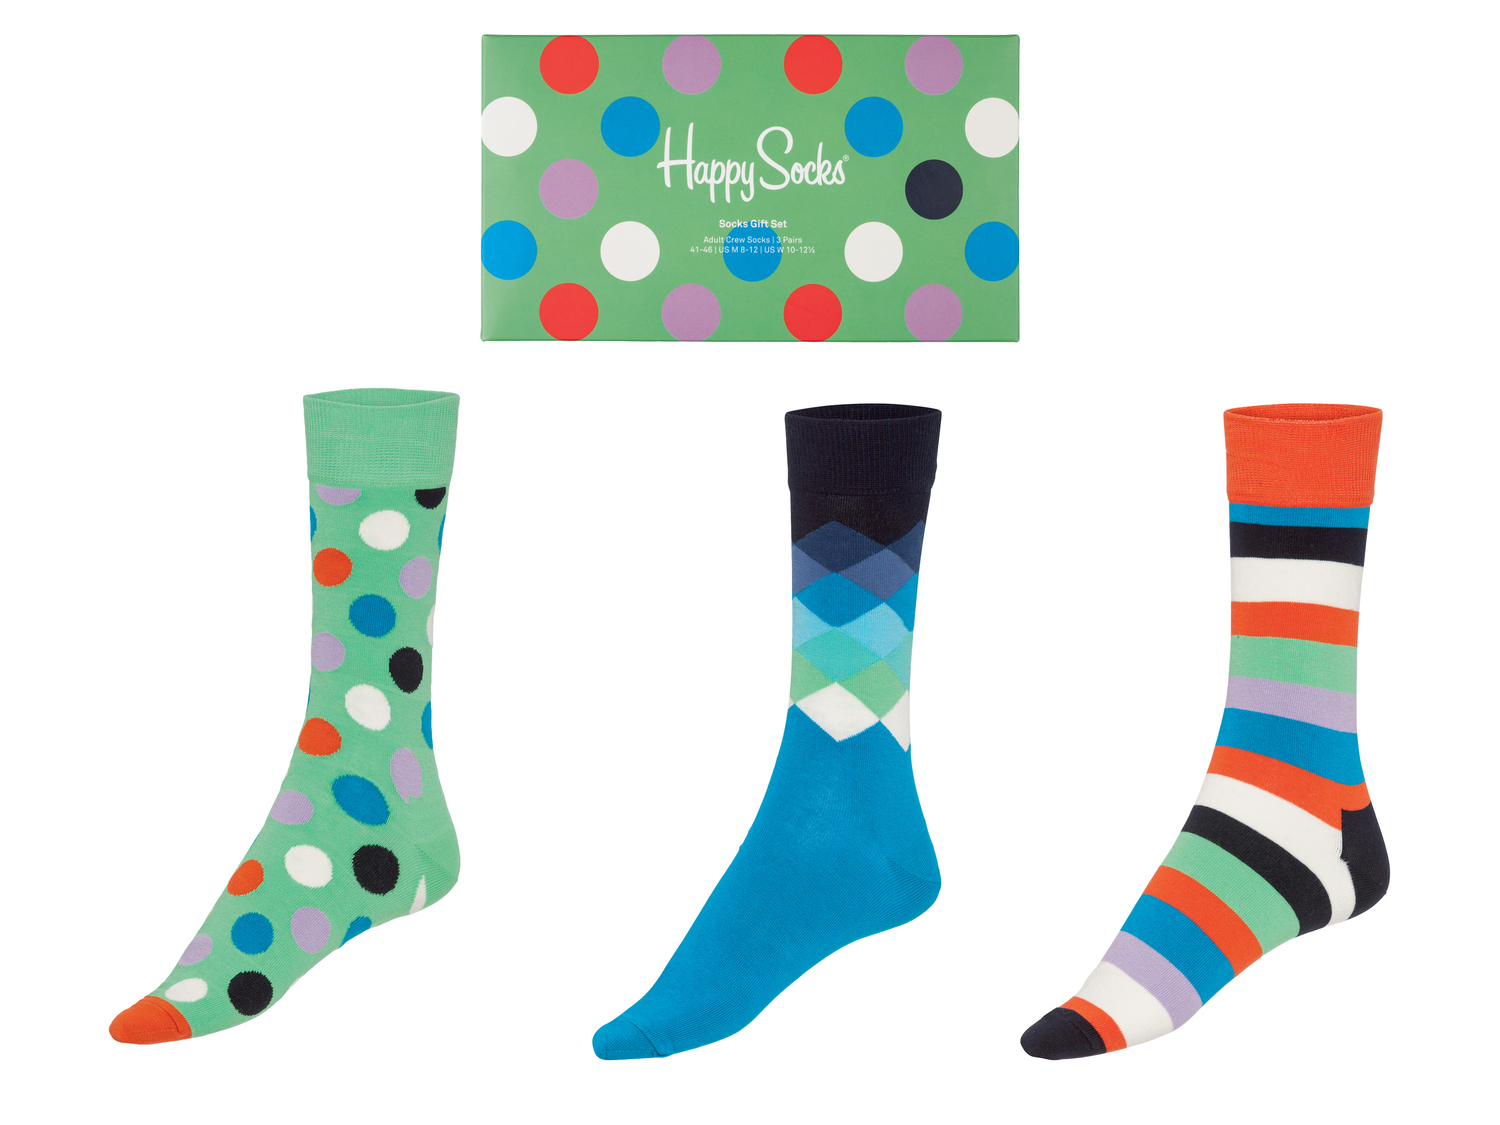 Calze Happy Socks Happy-socks, prezzo 12.99 &#8364; 
3 paia - Misure: 36-46 ...